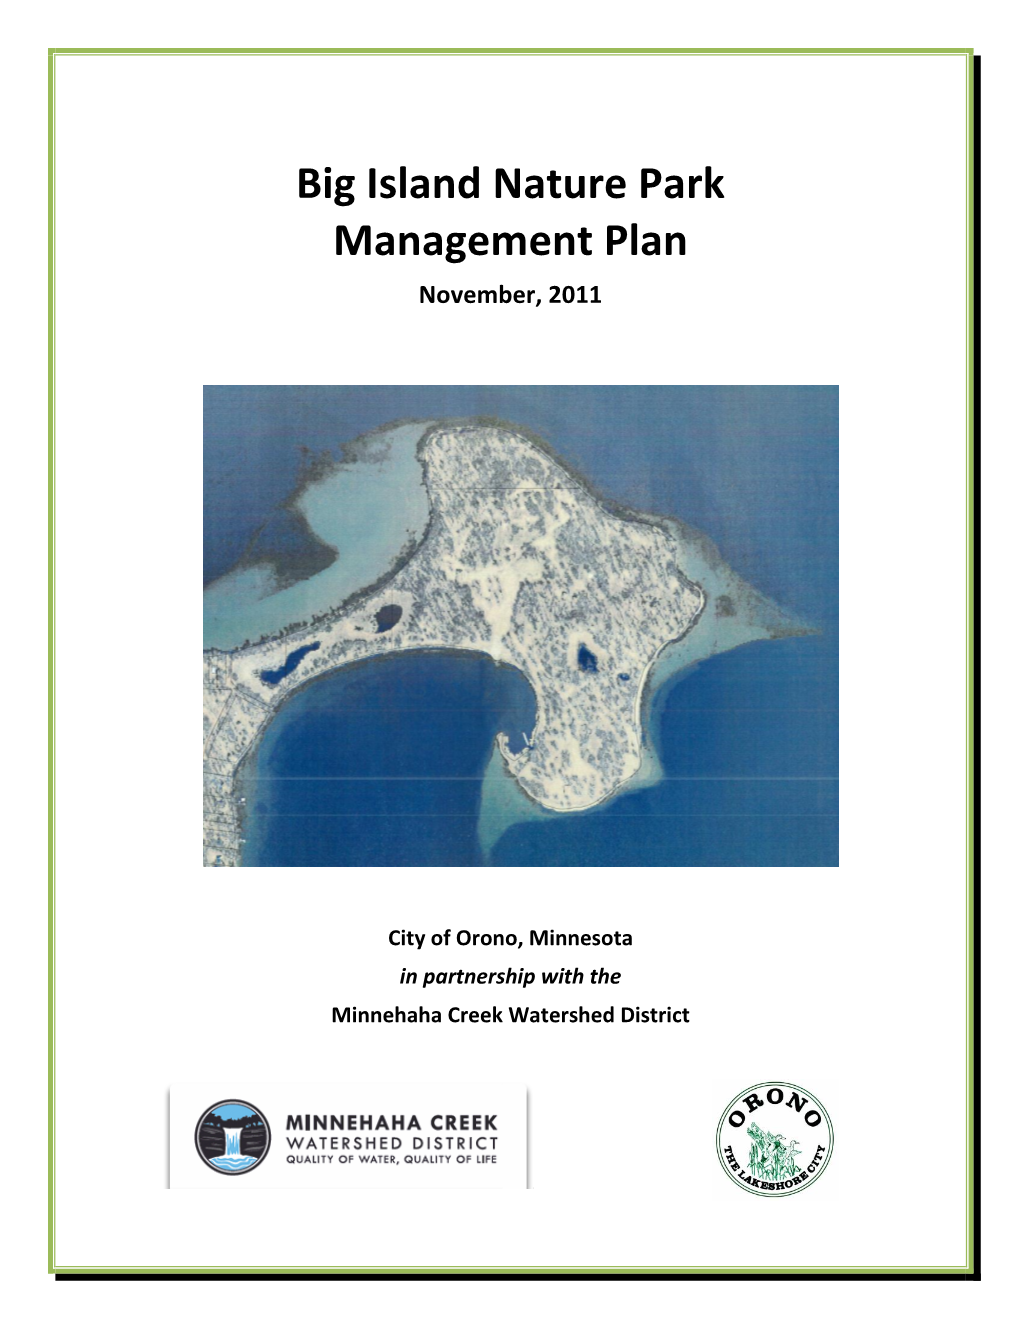 Big Island Nature Park Management Plan November, 2011